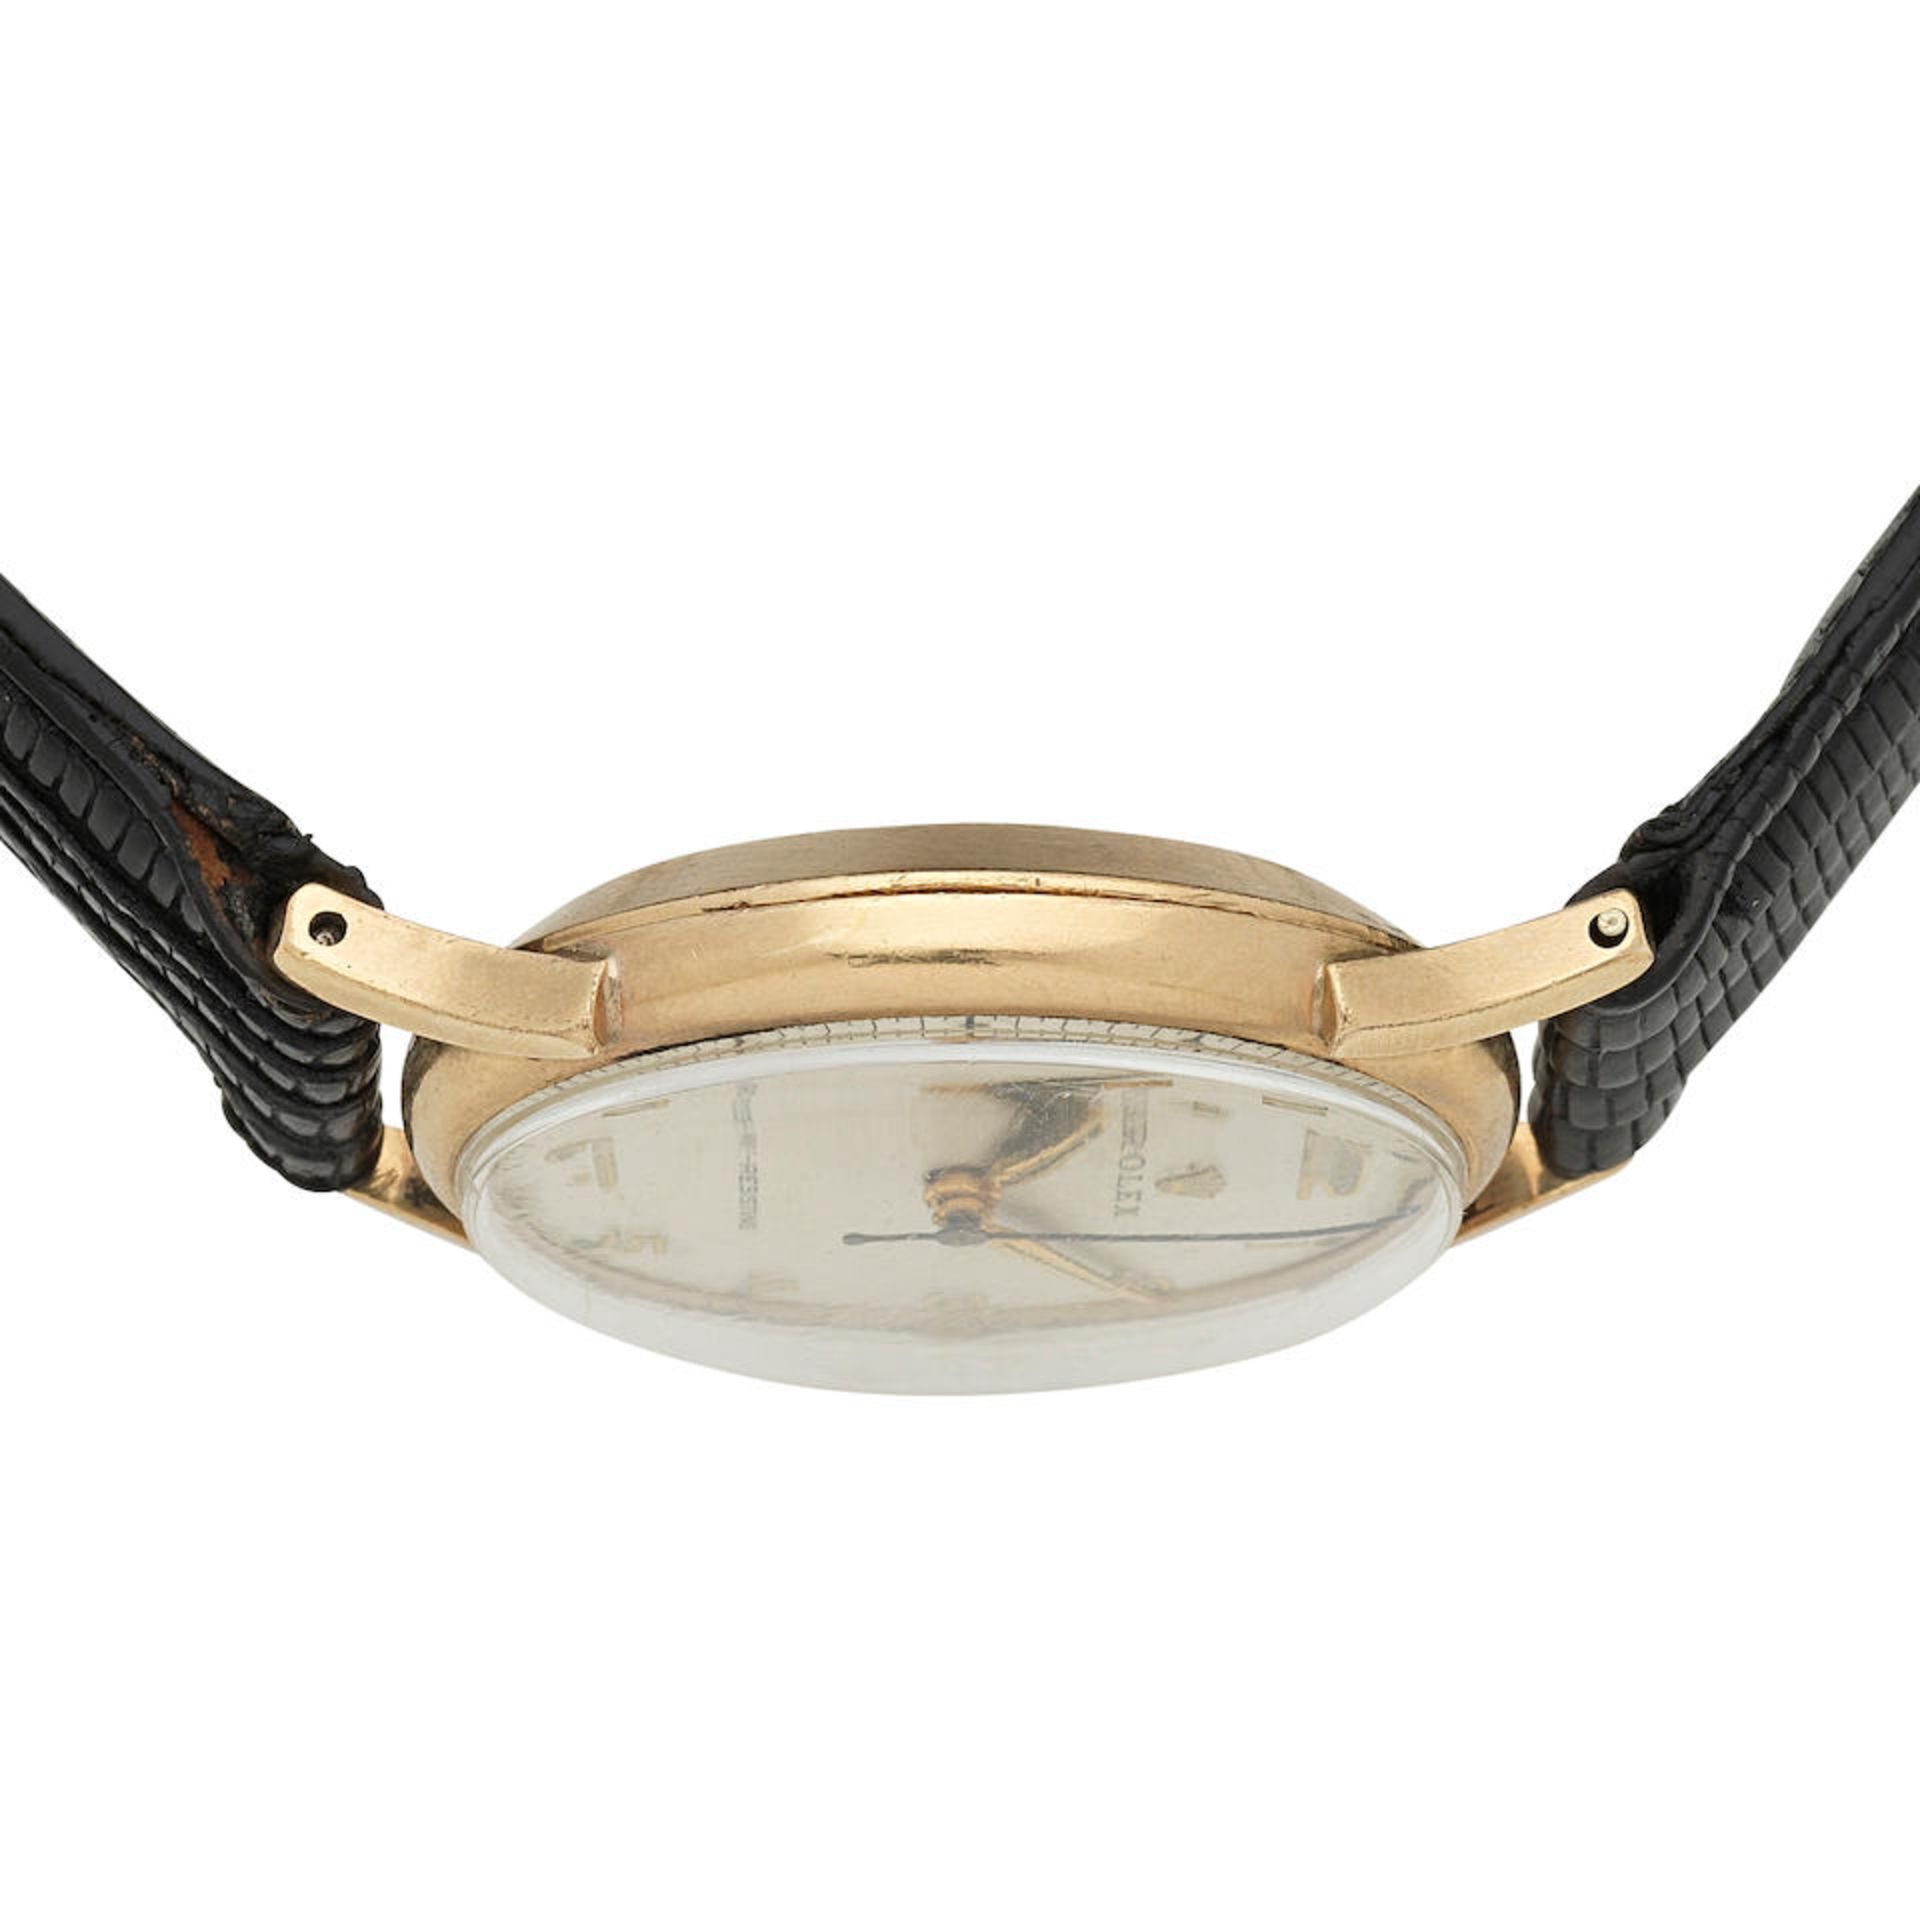 Rolex. A 9K gold manual wind wristwatch Ref: 12857, Birmingham Hallmark for 1954 - Image 2 of 5